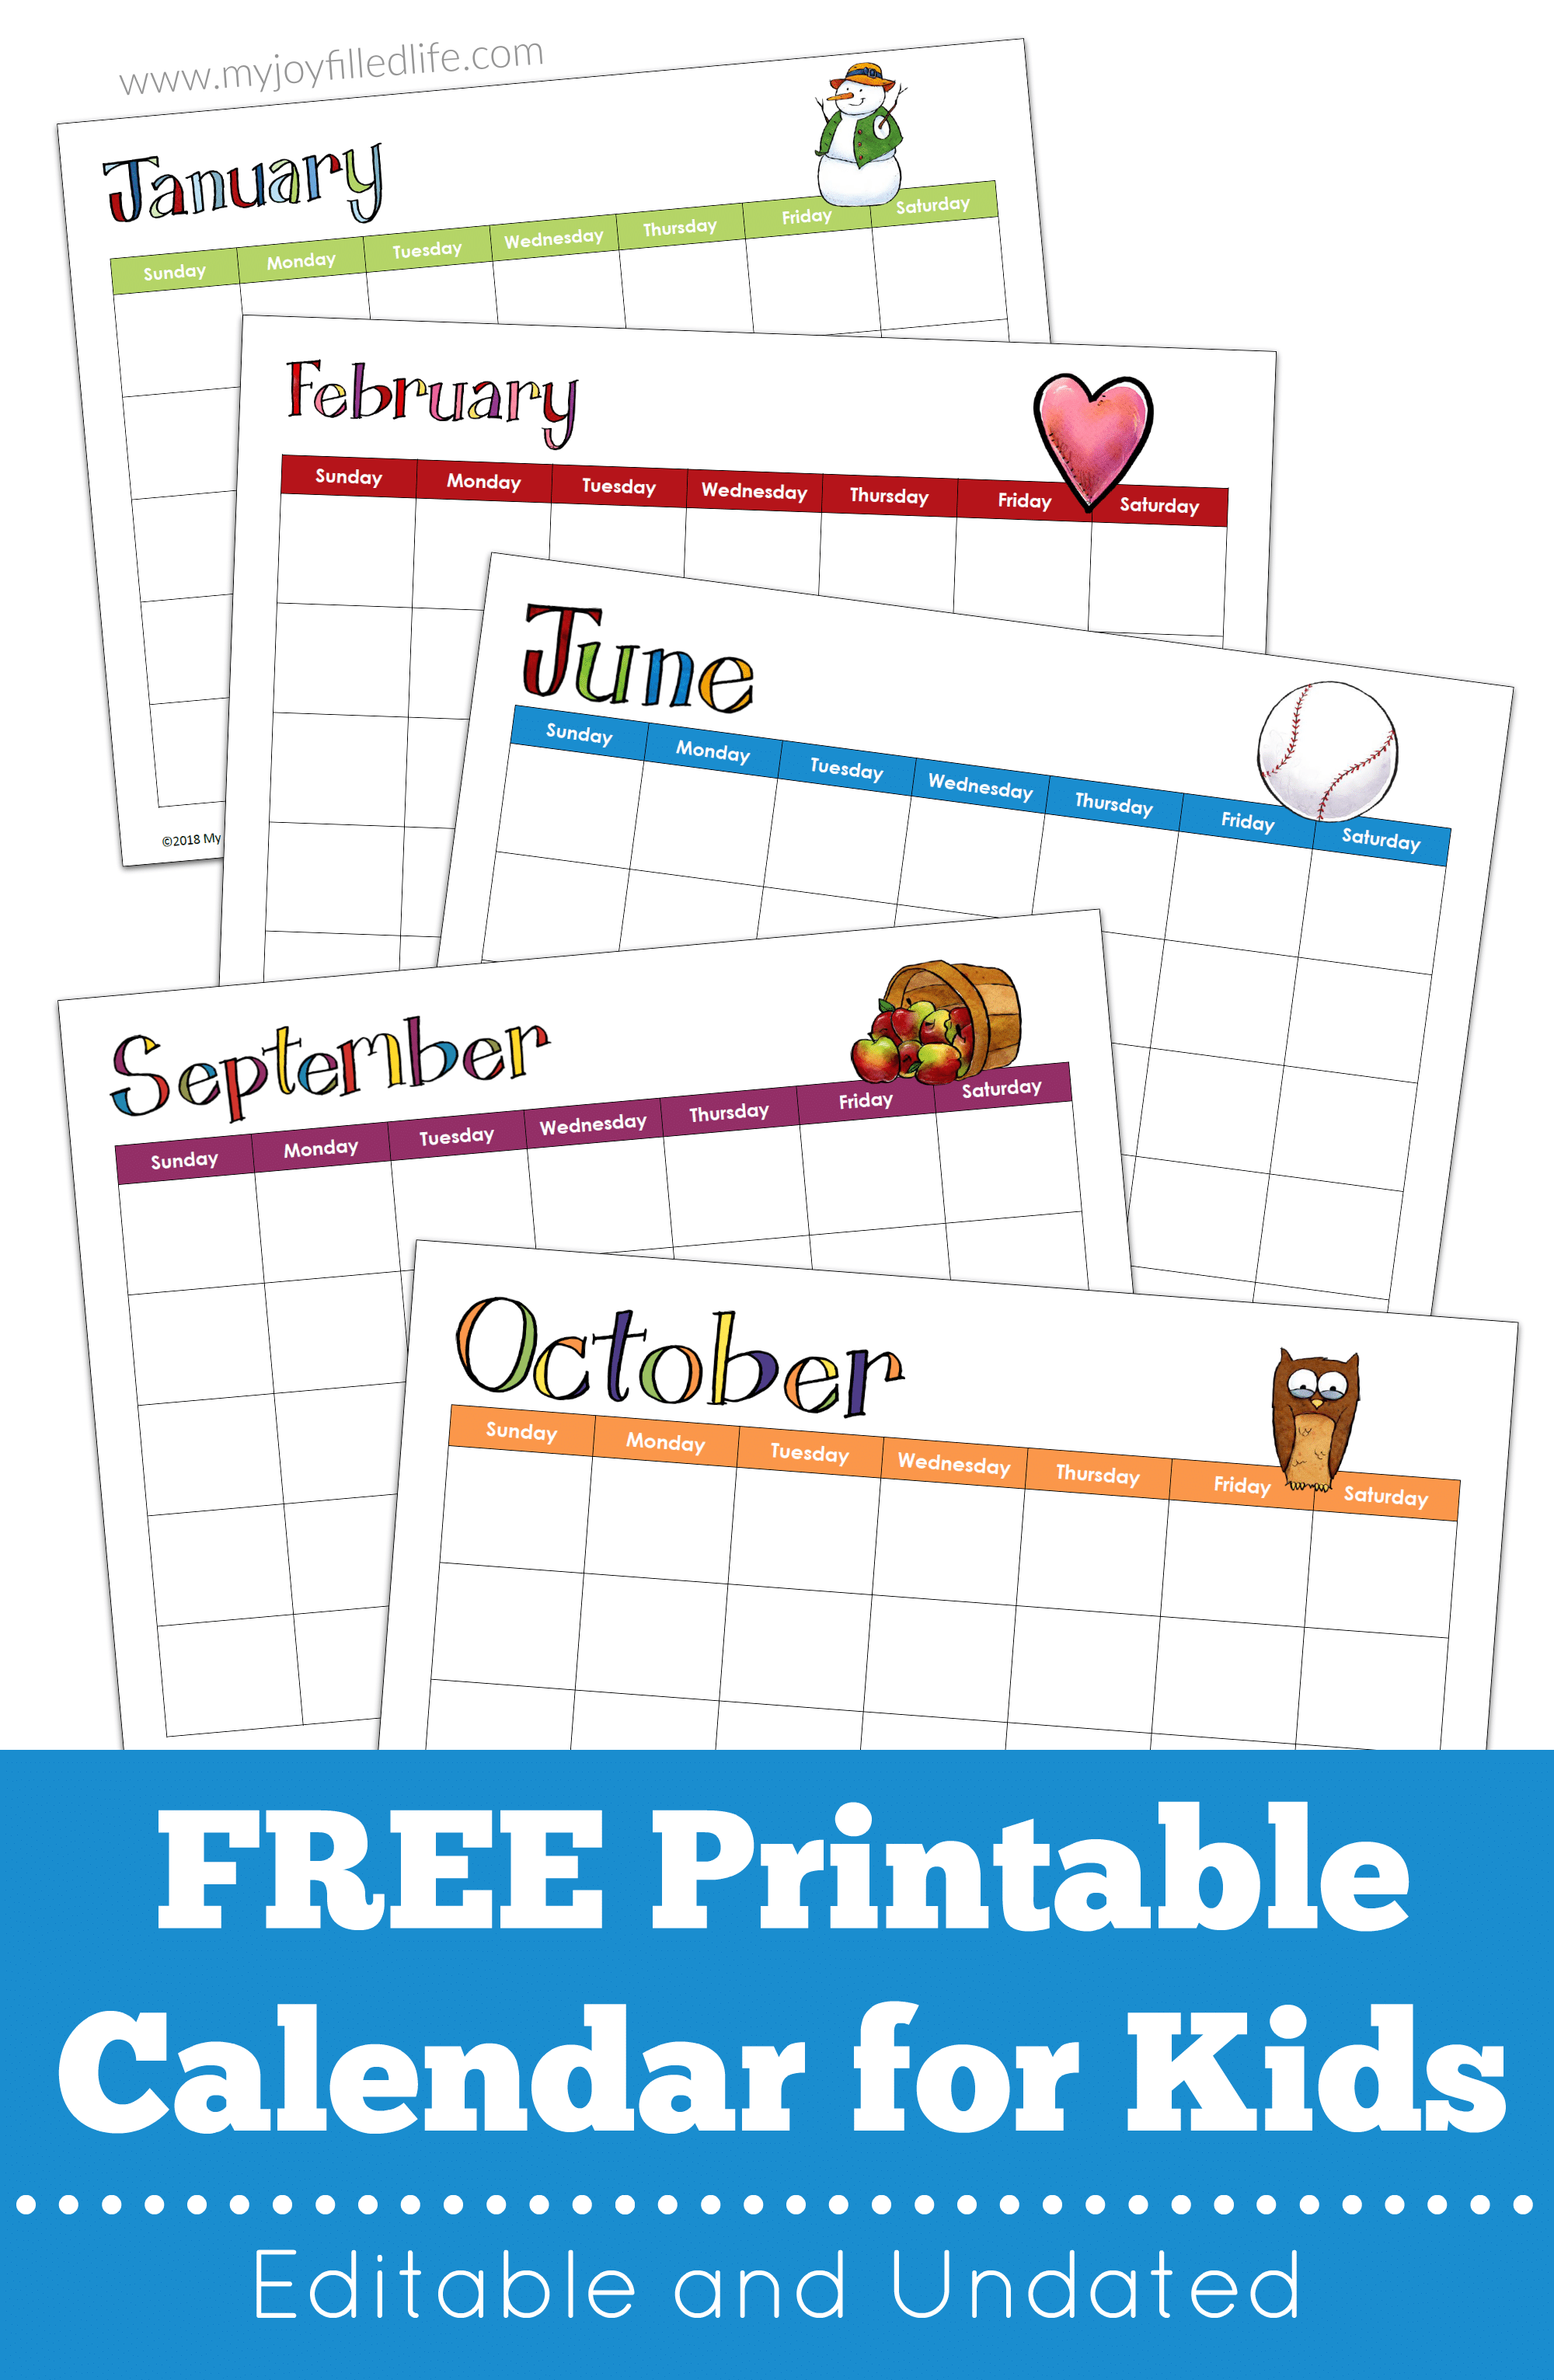 FREE Printable Calendar for Kids Editable & Undated My JoyFilled Life